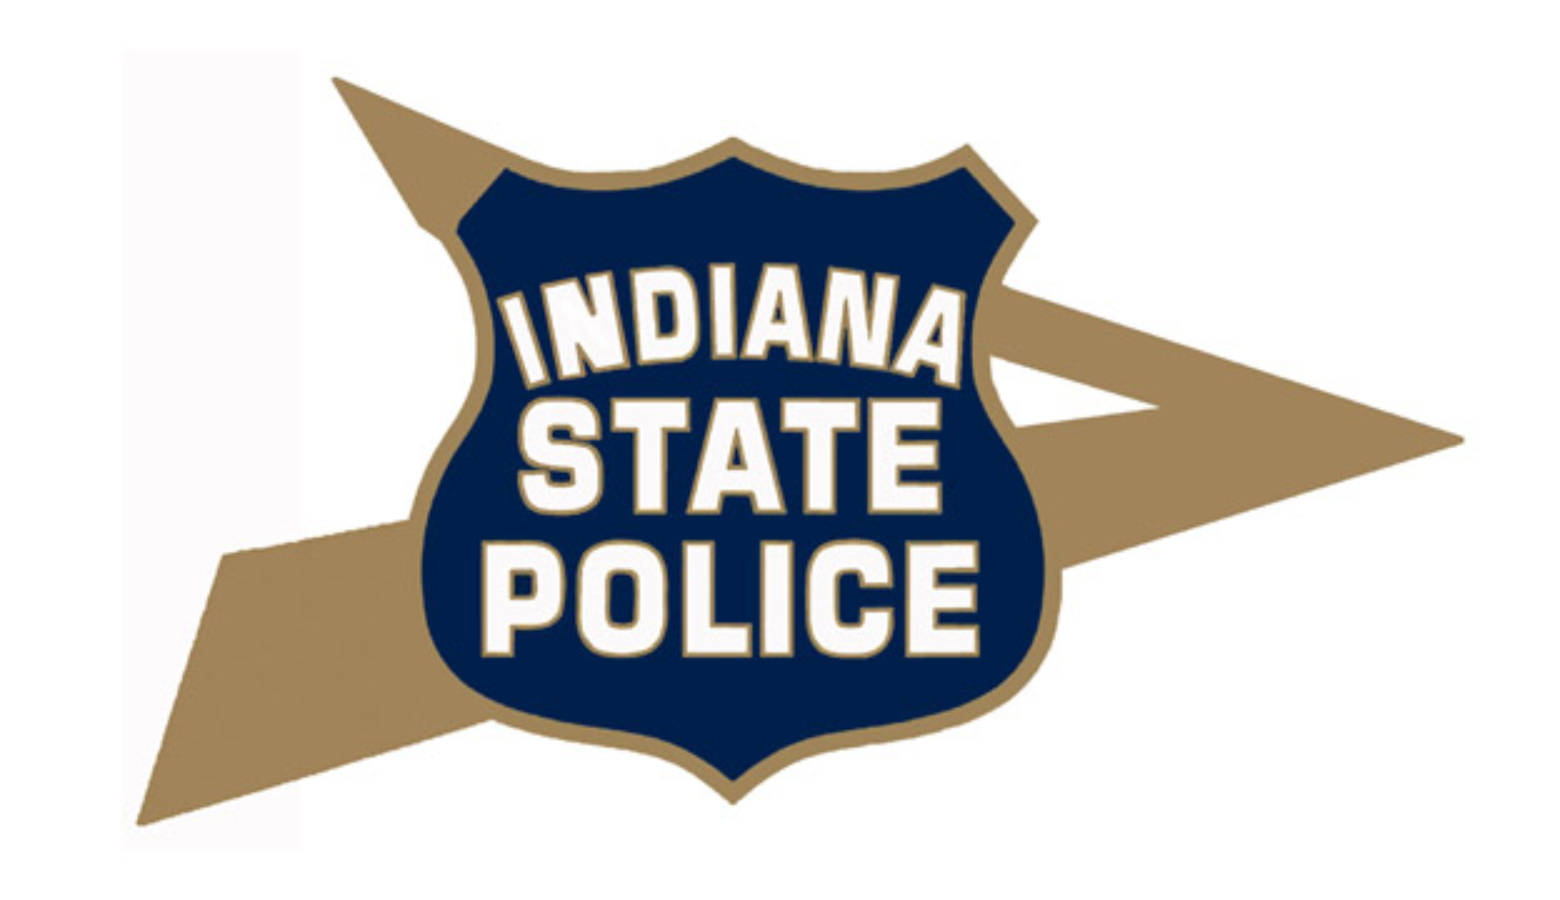 Indiana State Police Svg